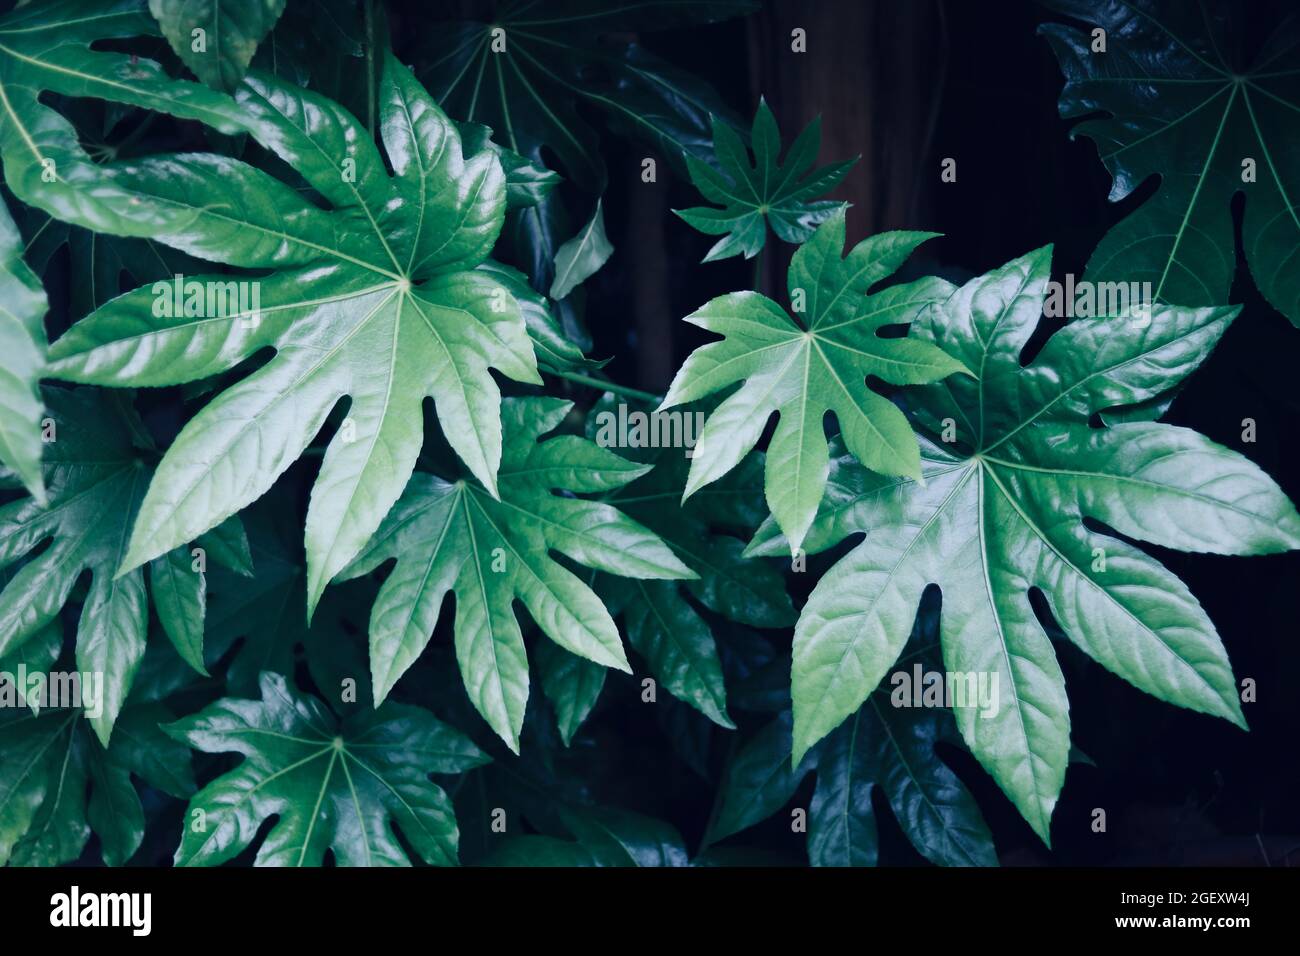 Moody image of lush green fatsia foliage showing leaf detail Stock Photo